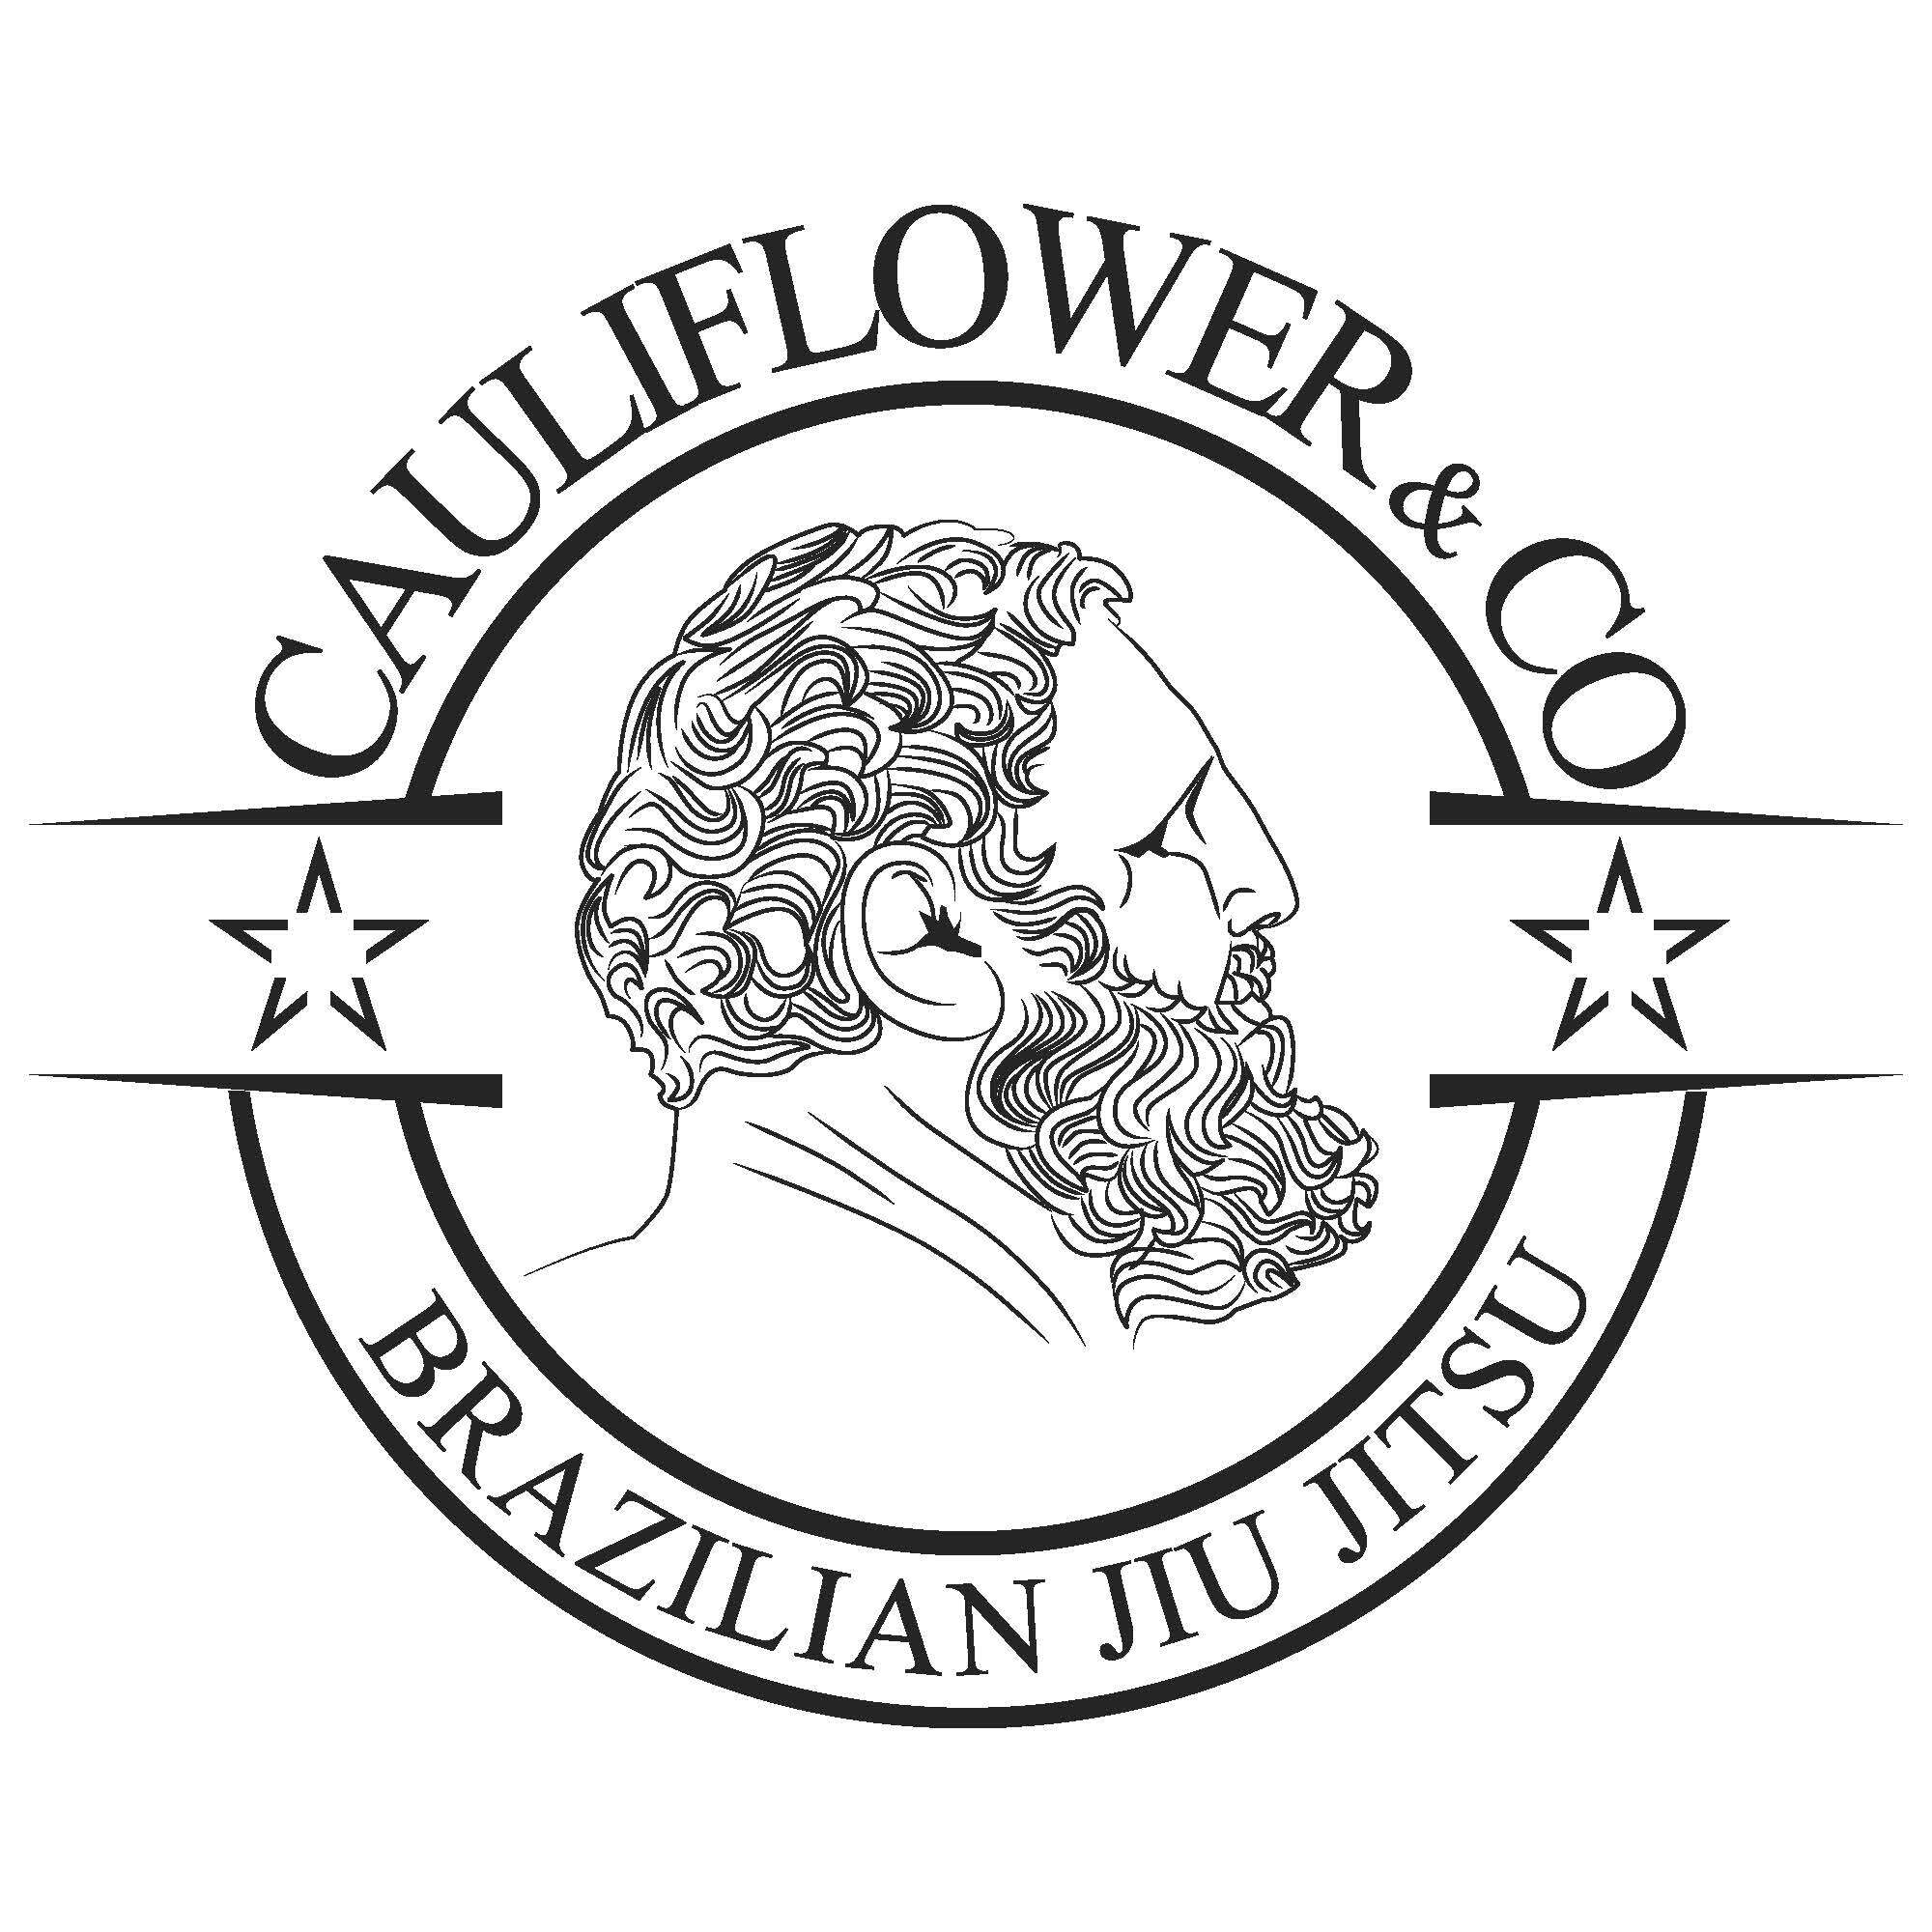 Cauliflower and Co.